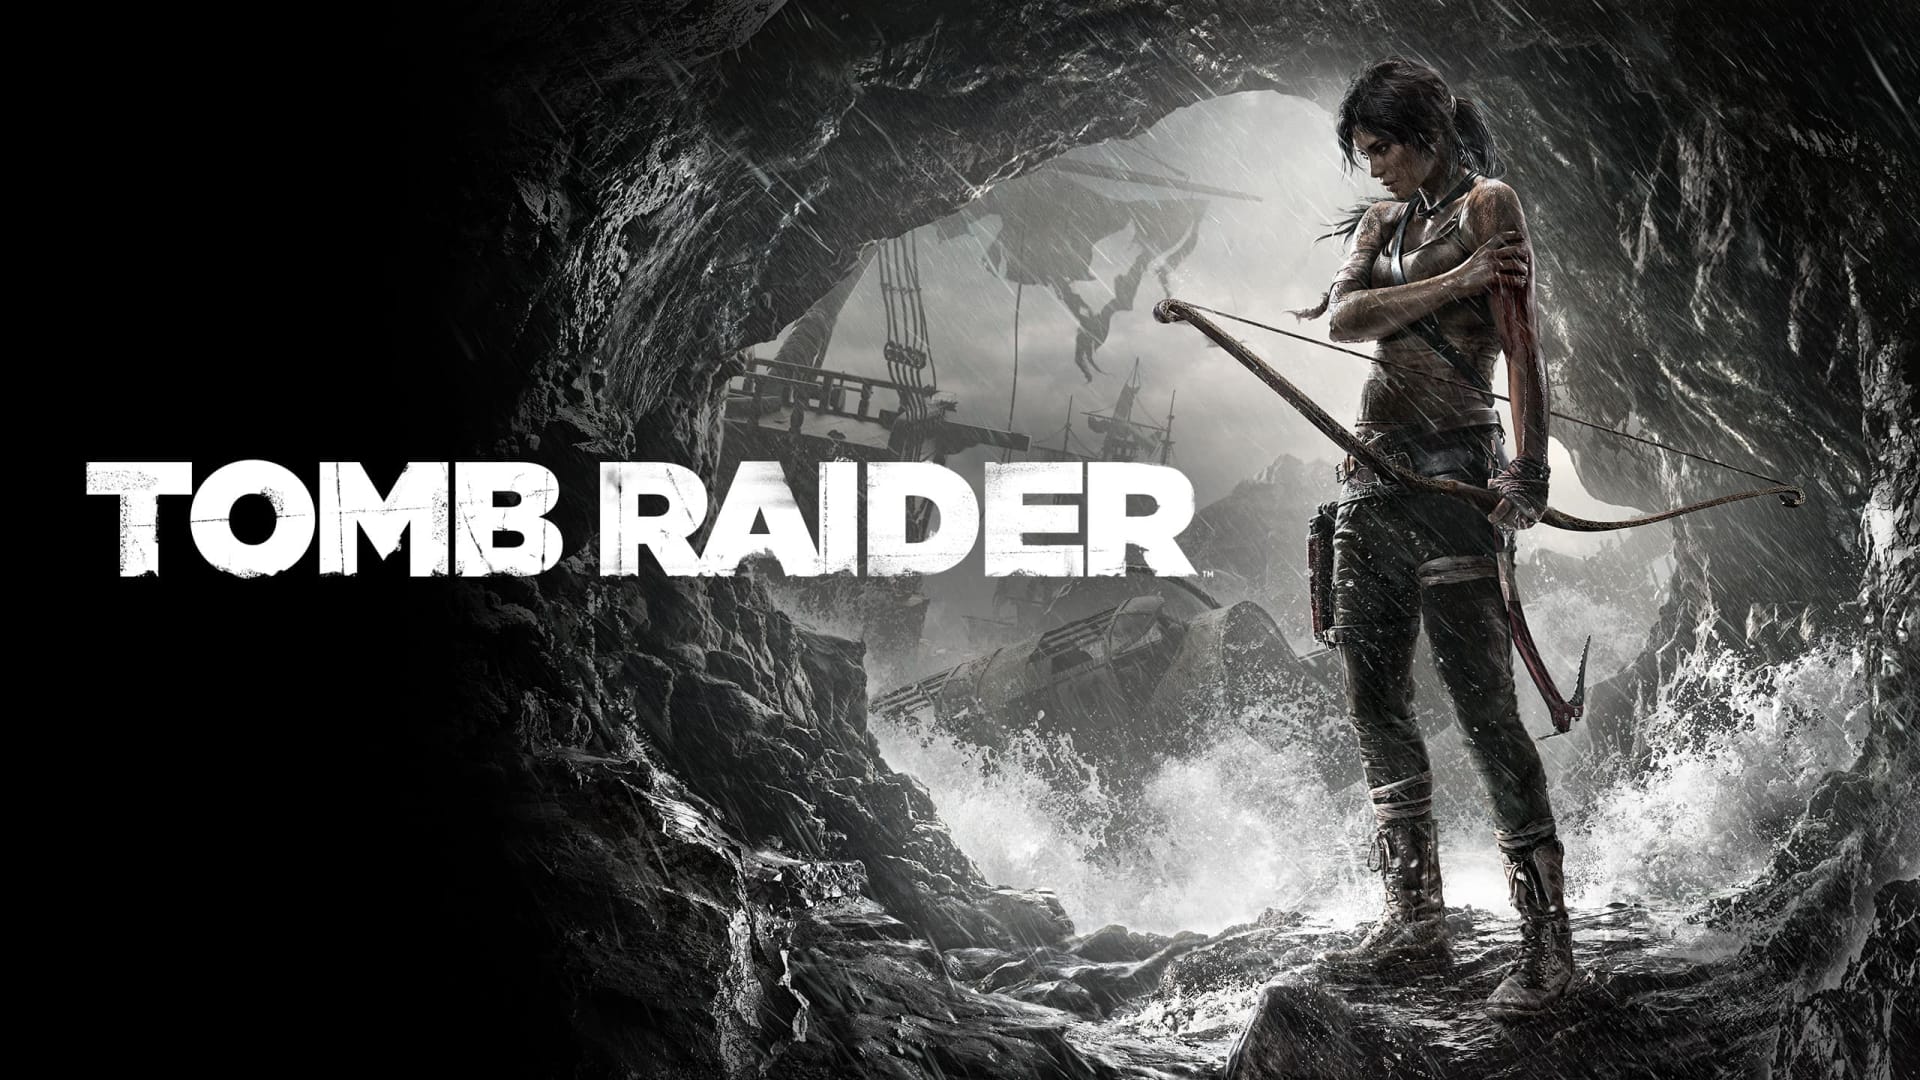 Tomb Raider header image in black and white, new Tomb Raider game 